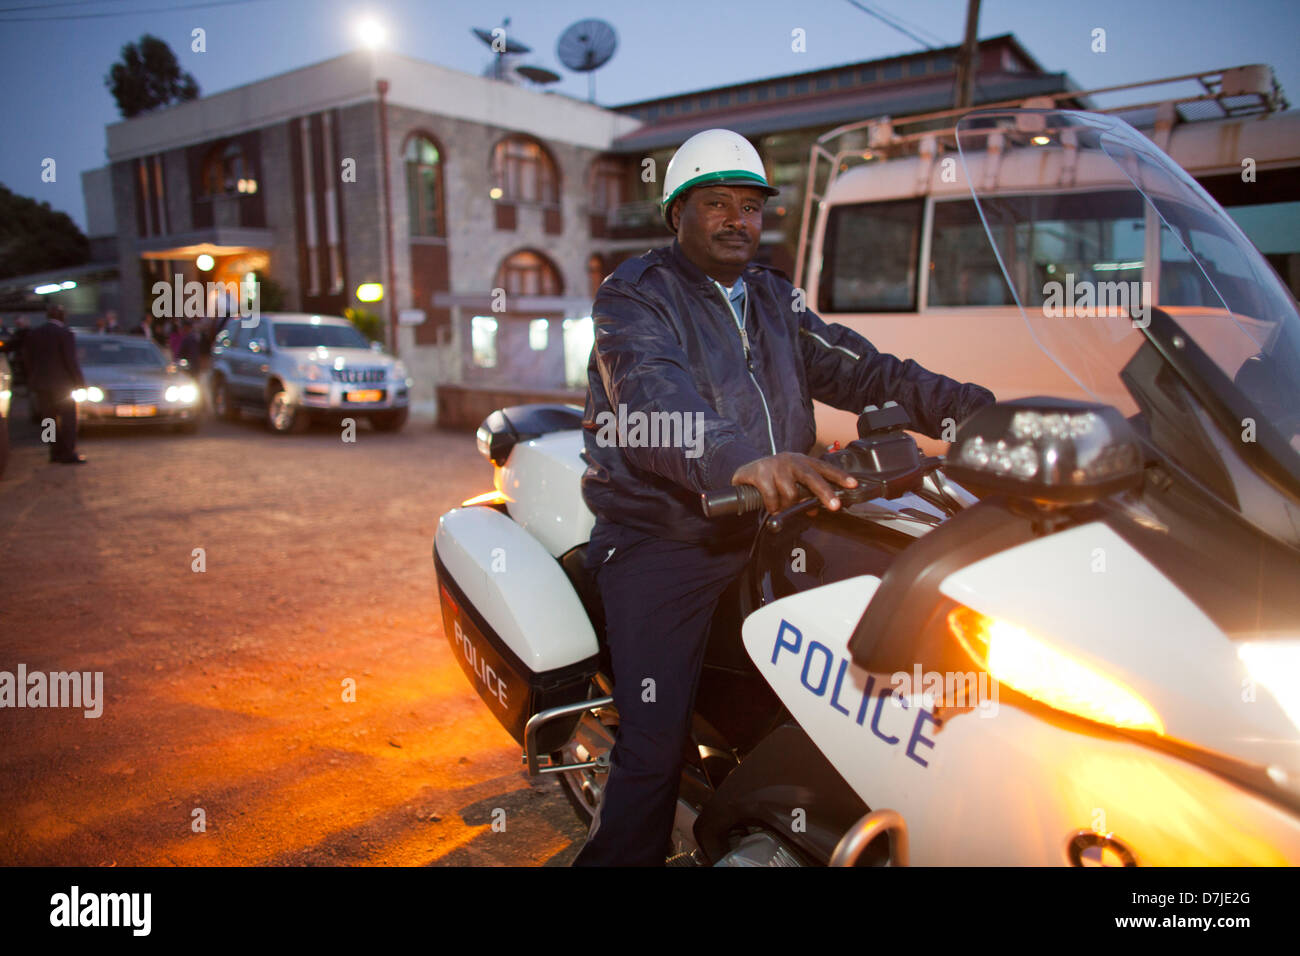 Agent de police en moto en Ethiopie Banque D'Images